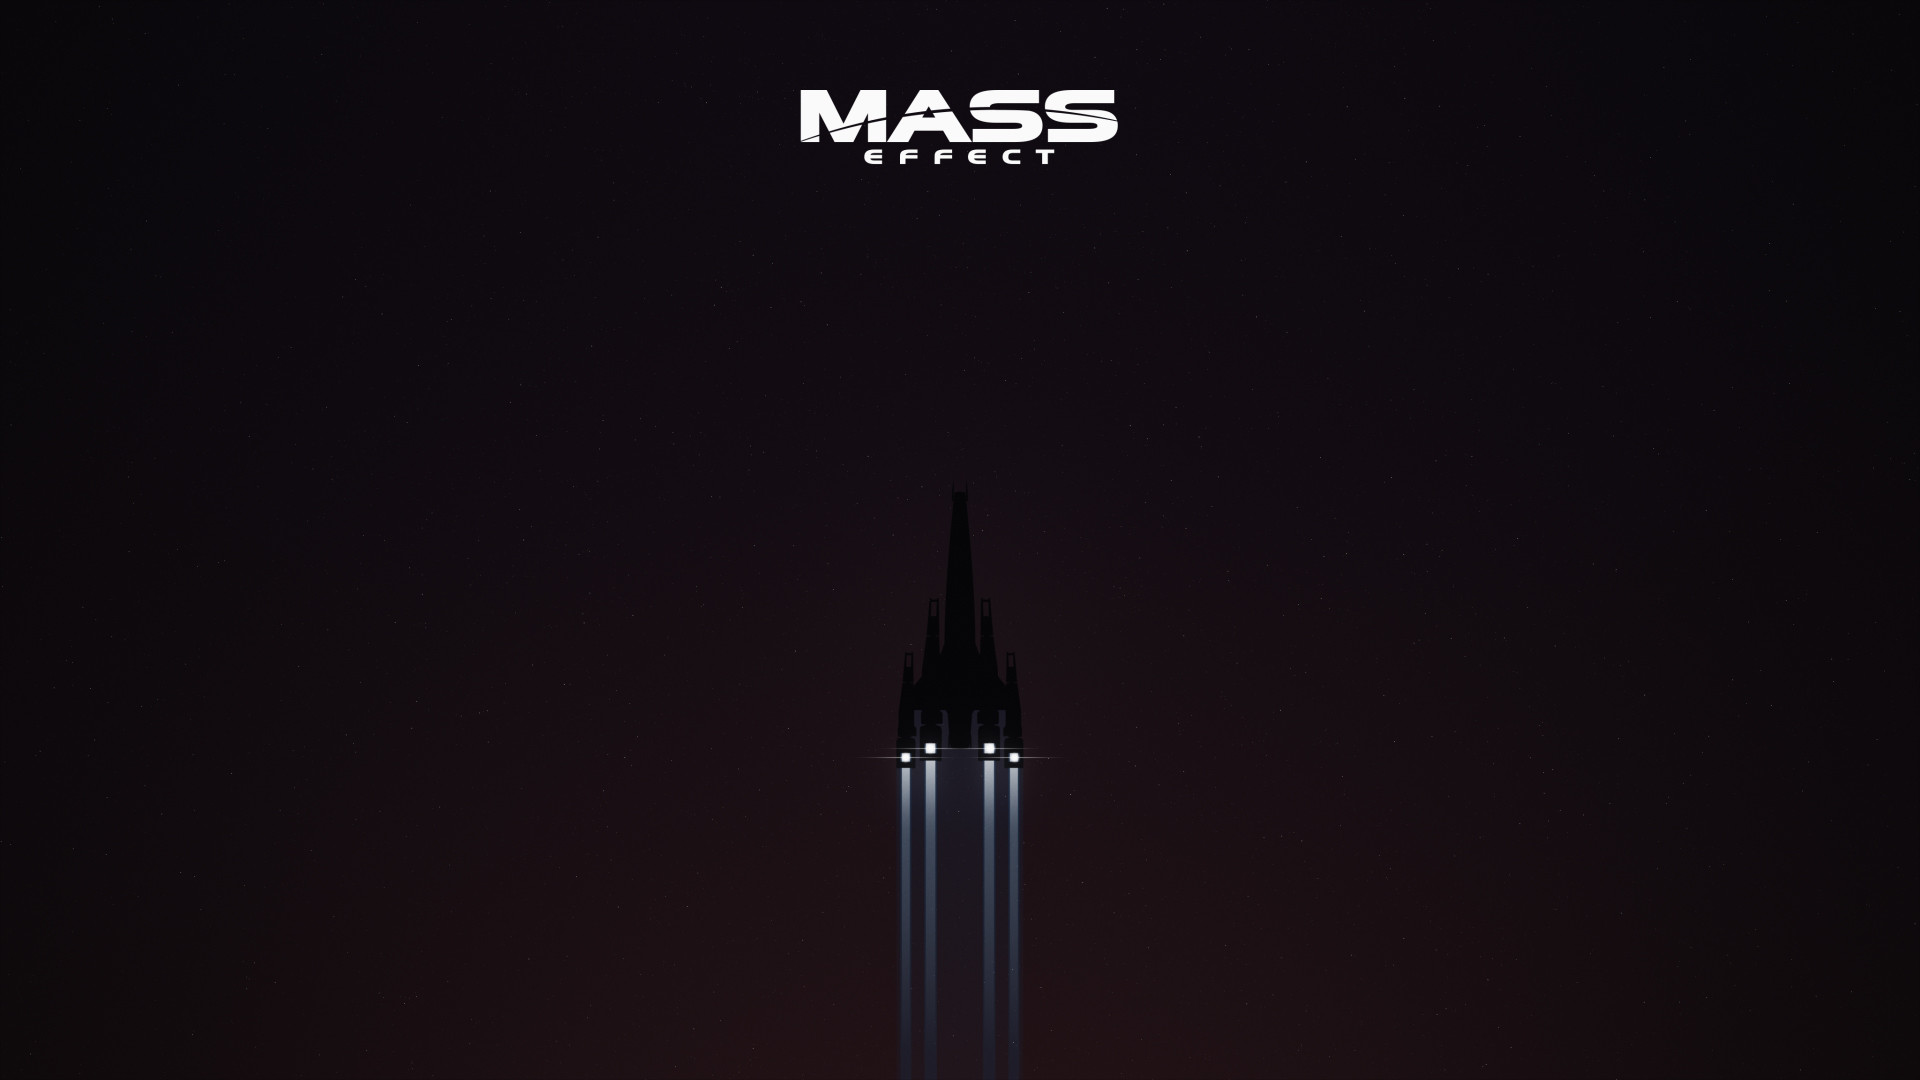 Mass Effect On The Super Nintendo And Minimalist Wallpaper